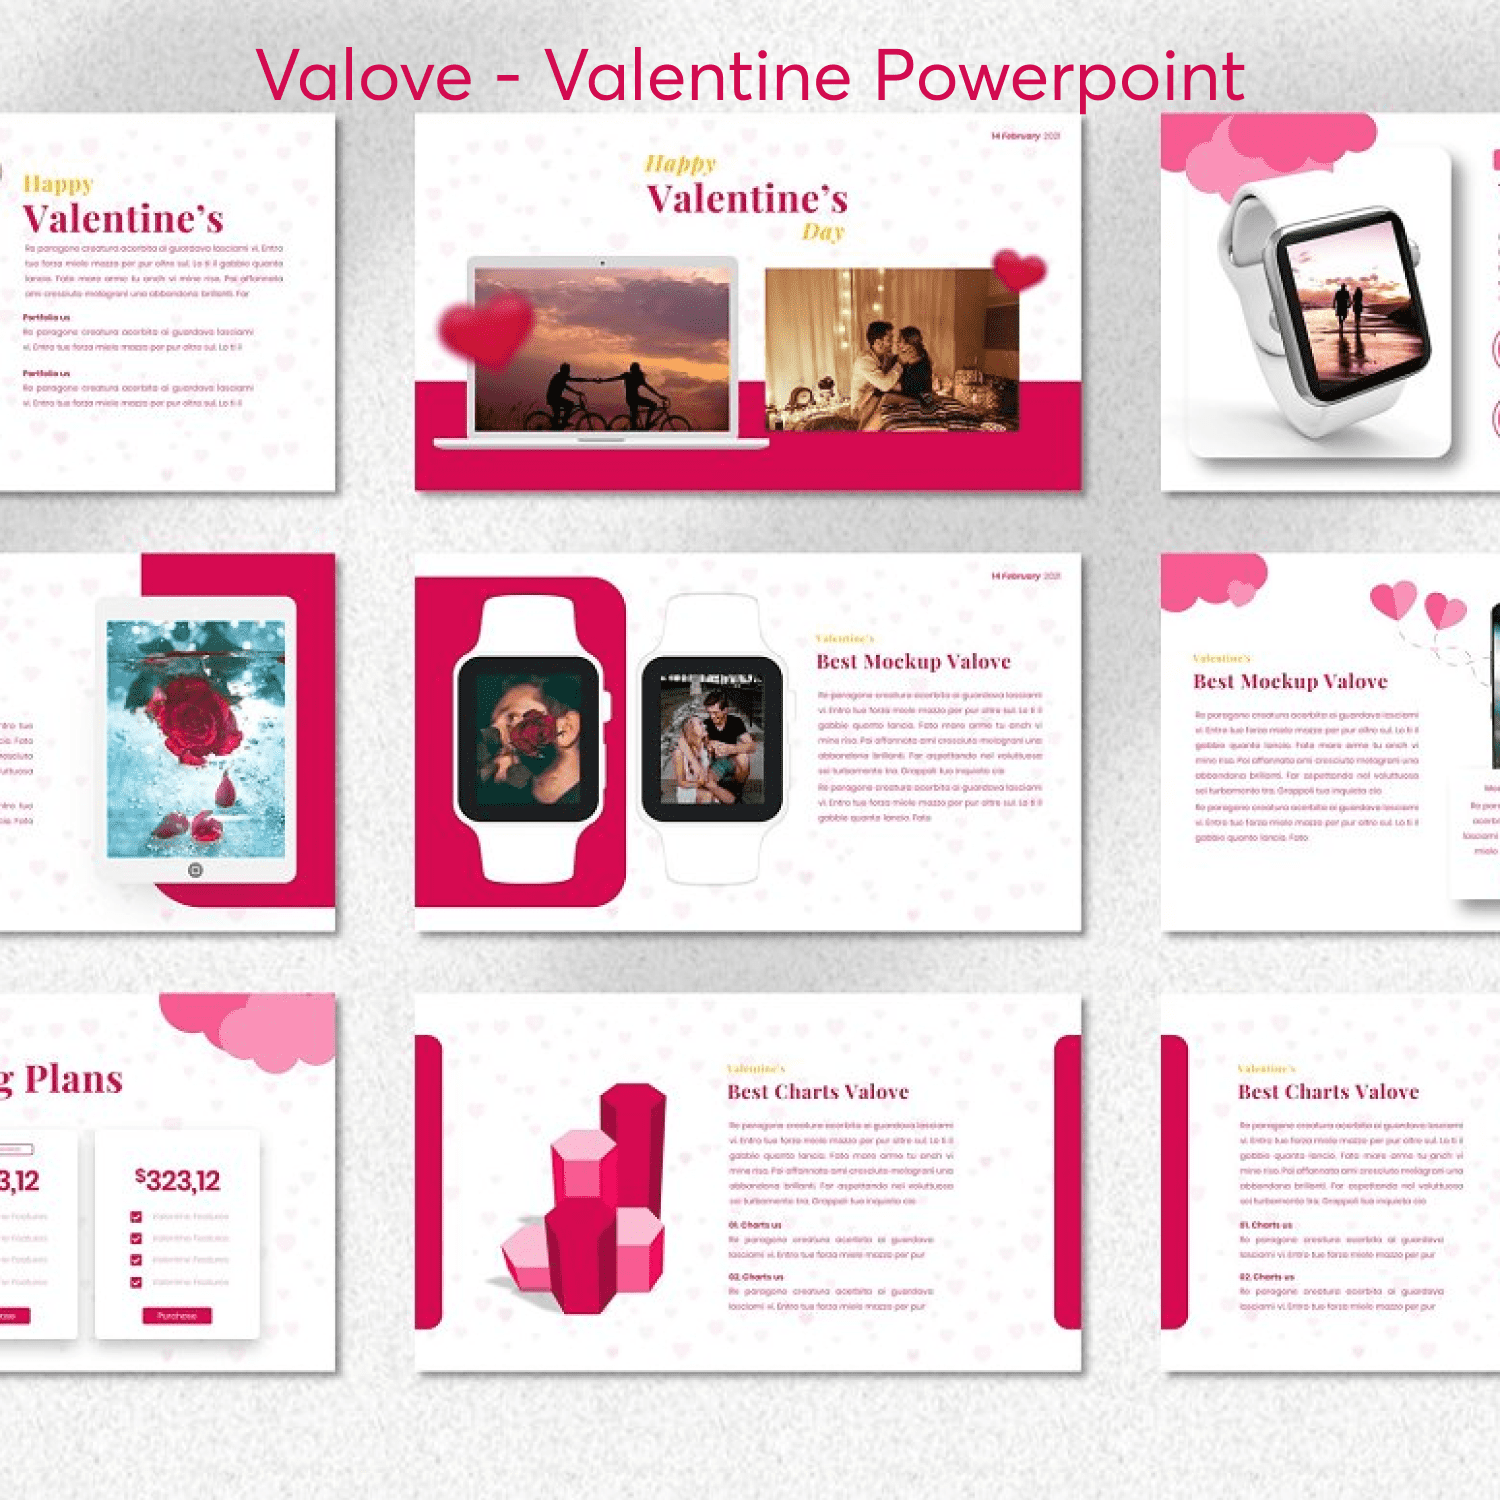 Valove - Valentine Powerpoint cover.